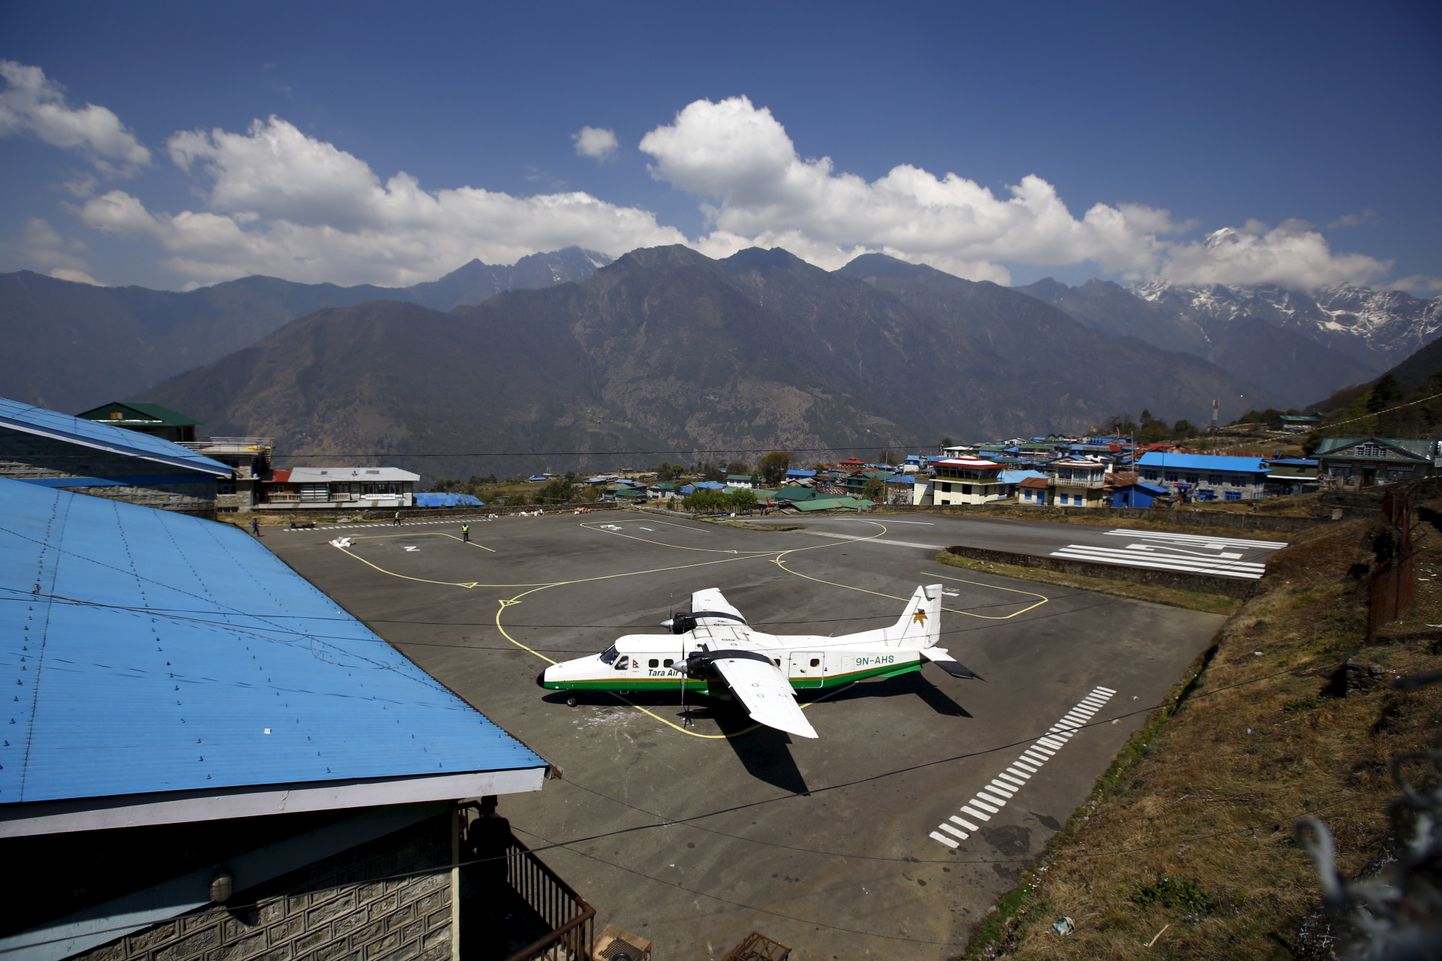 Lennufirma Tara Air reisilennuk Twin Otter Nepali Lukla lennuväljal. Foto on illustreeriv.